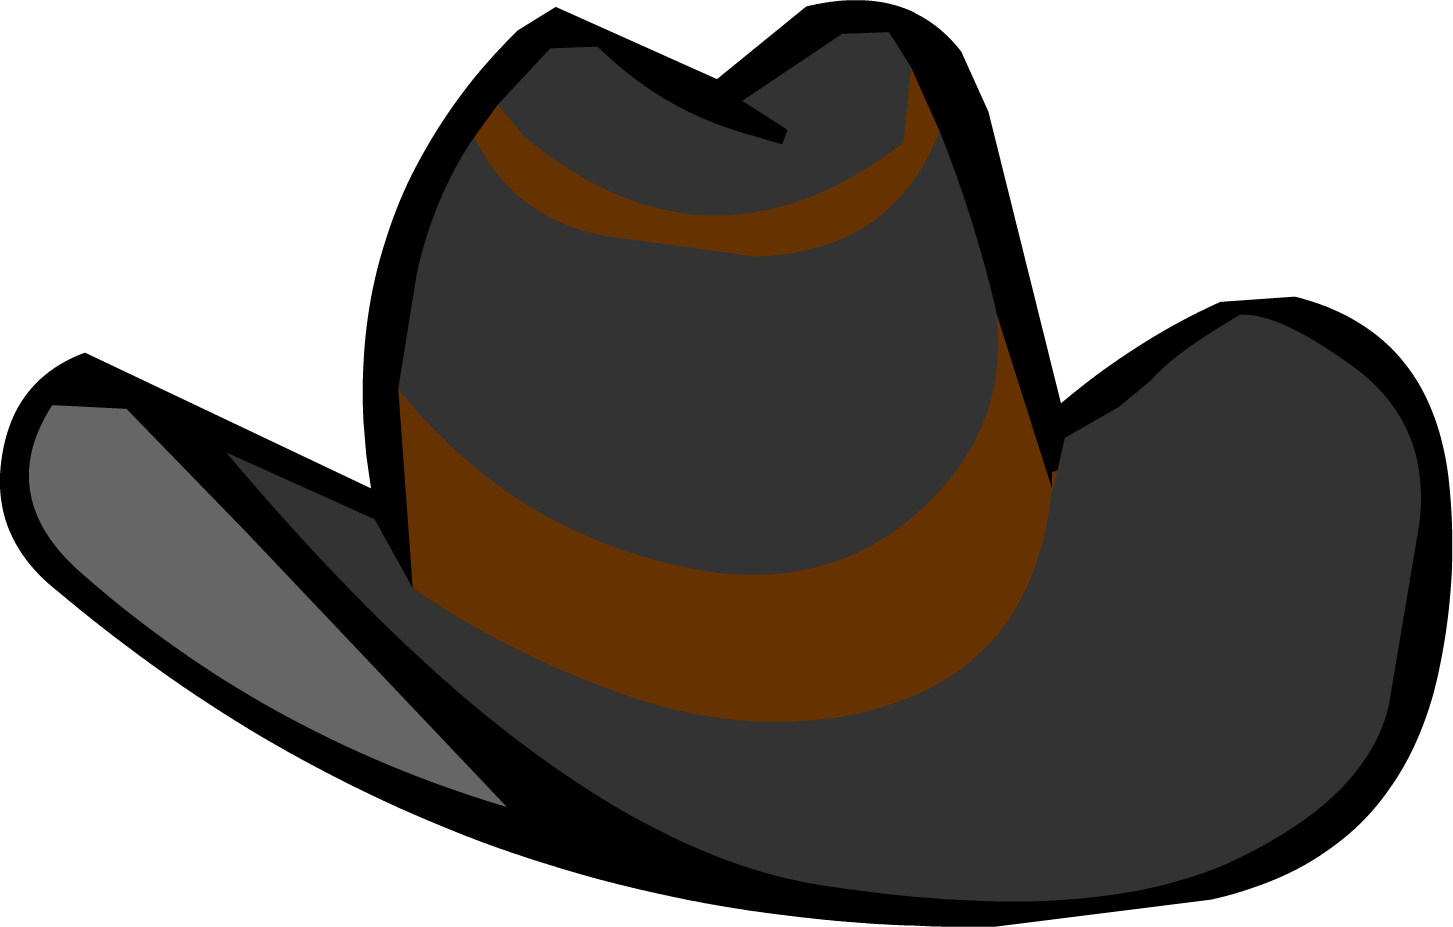 Cowboy hatwgirl hat clip art image - Cliparting.com